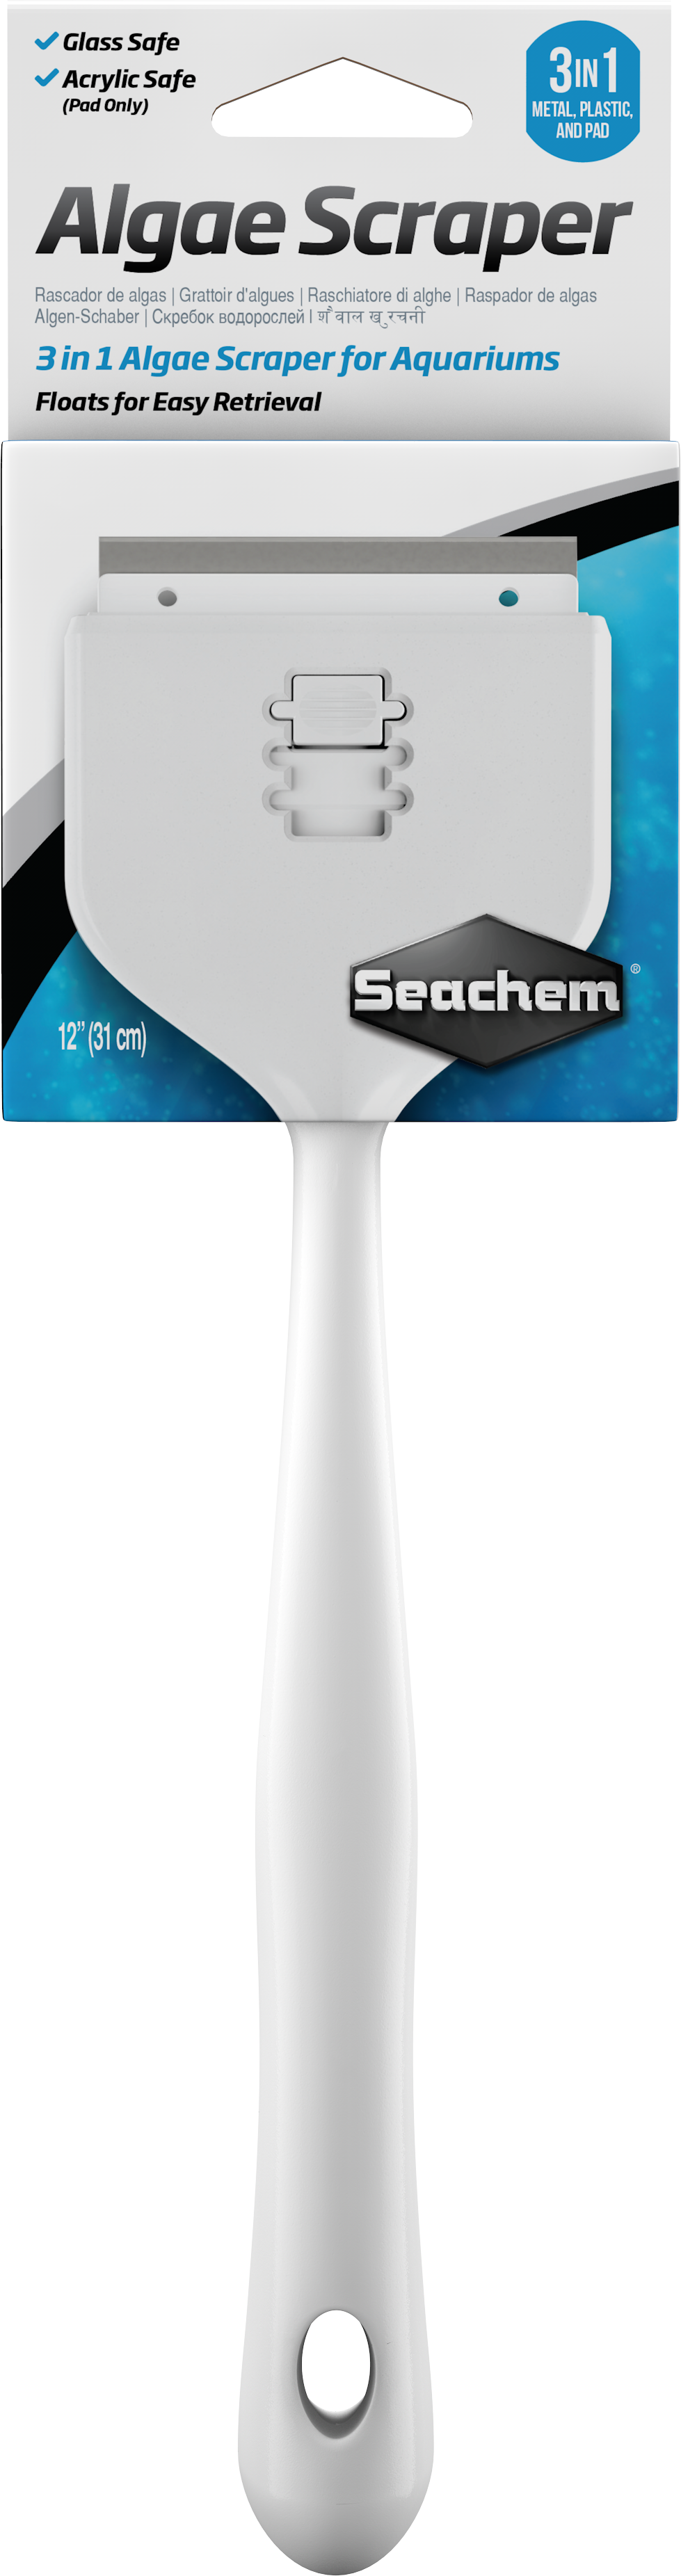 Seachem - Algae Scraper